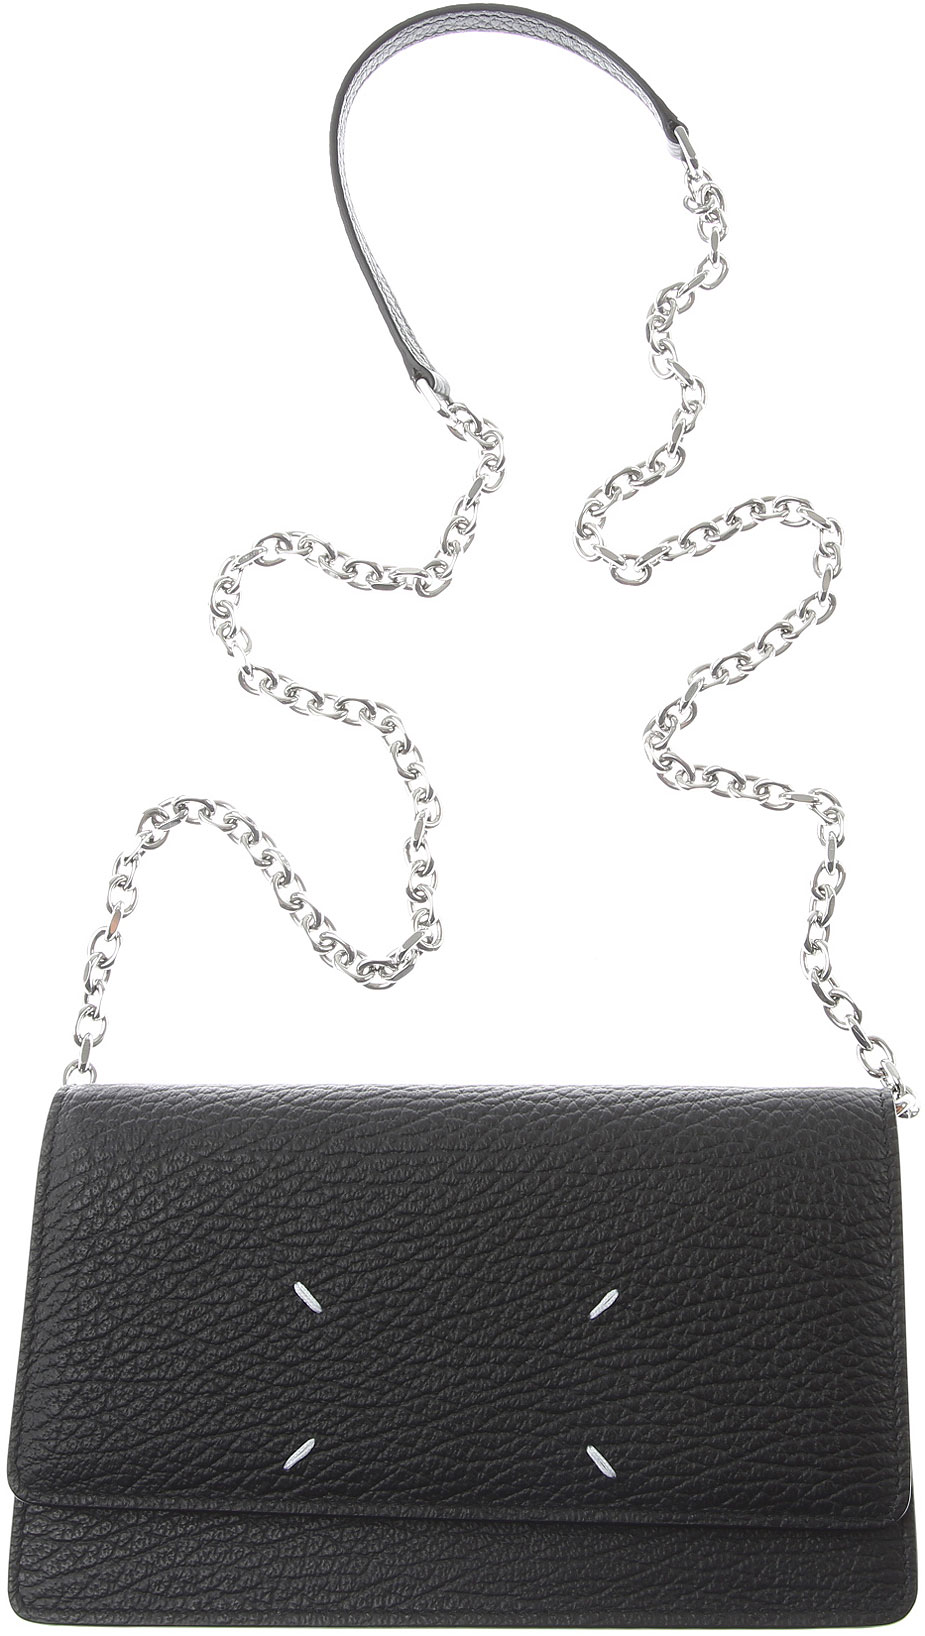 Handbags Maison Margiela, Style code: s56ui0147-p0399-t8013